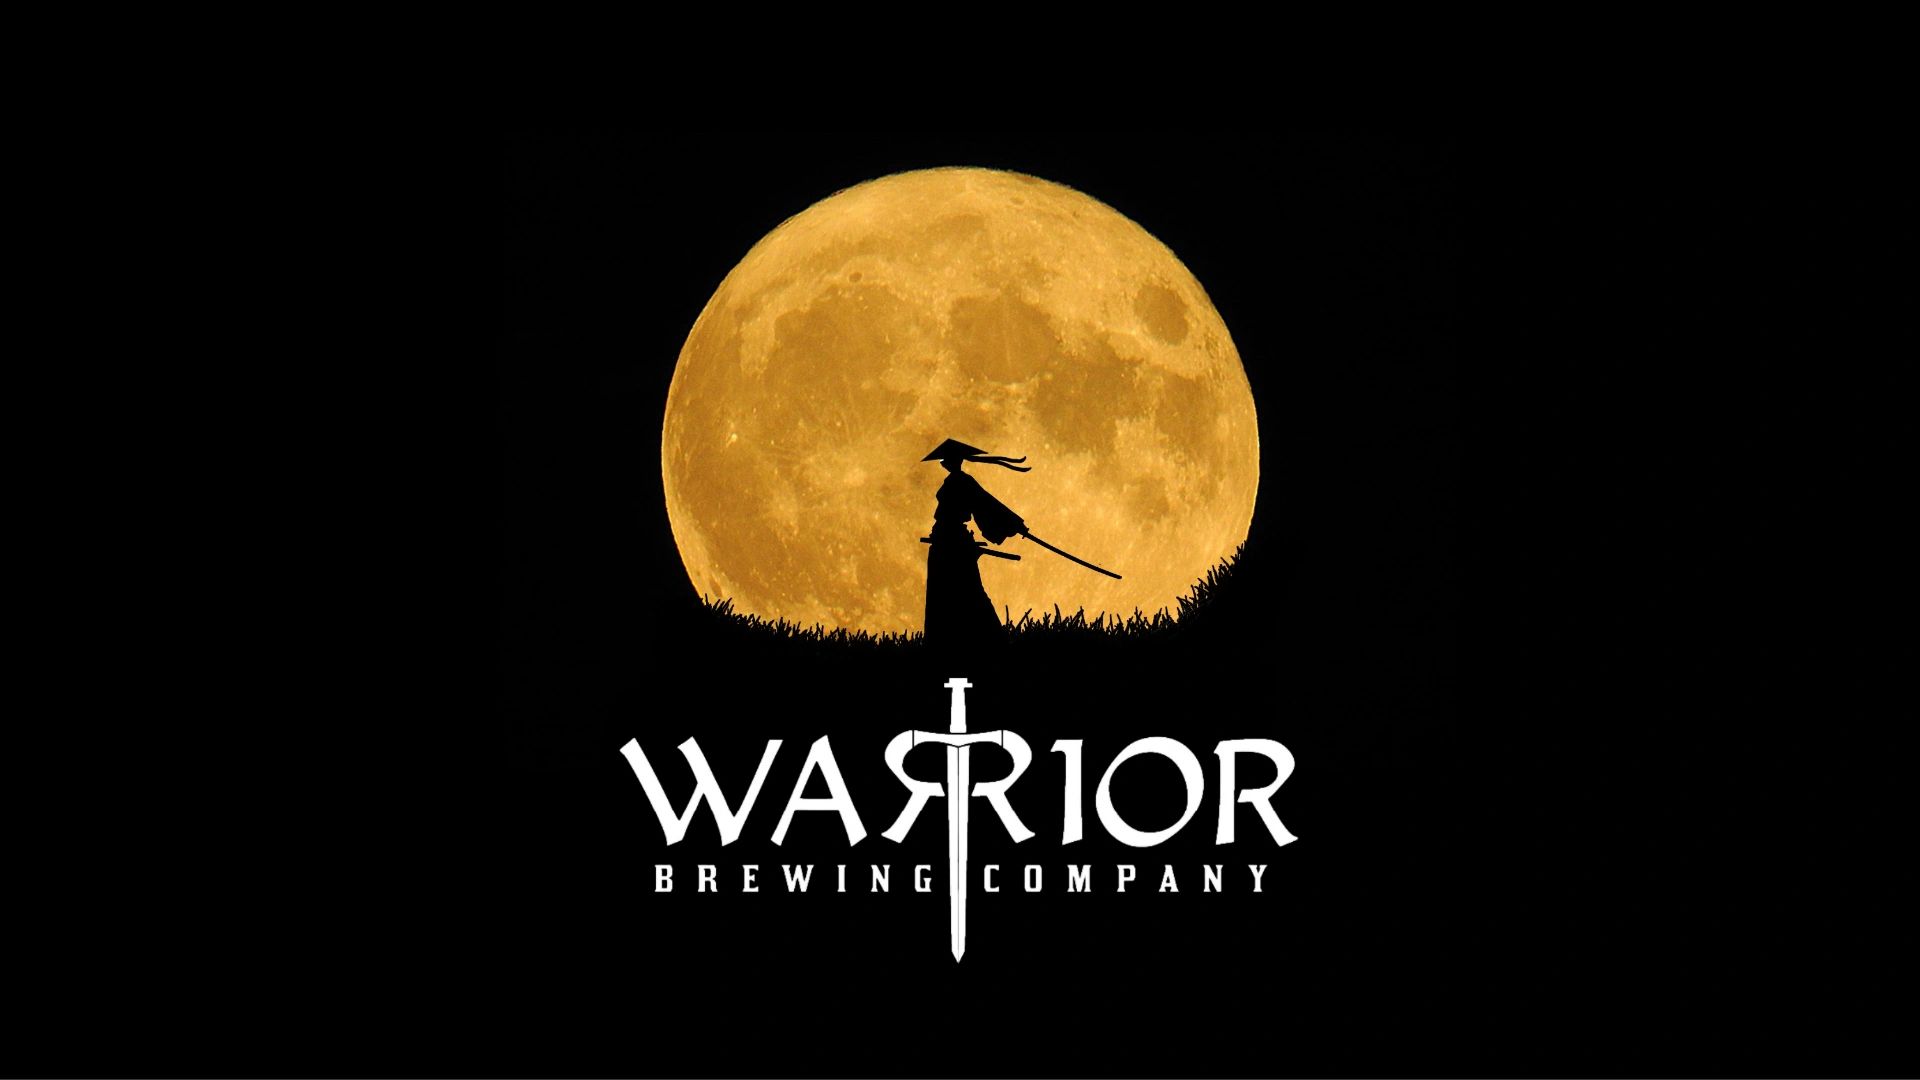 samurai warrior silhouette in front of a bright golden moon